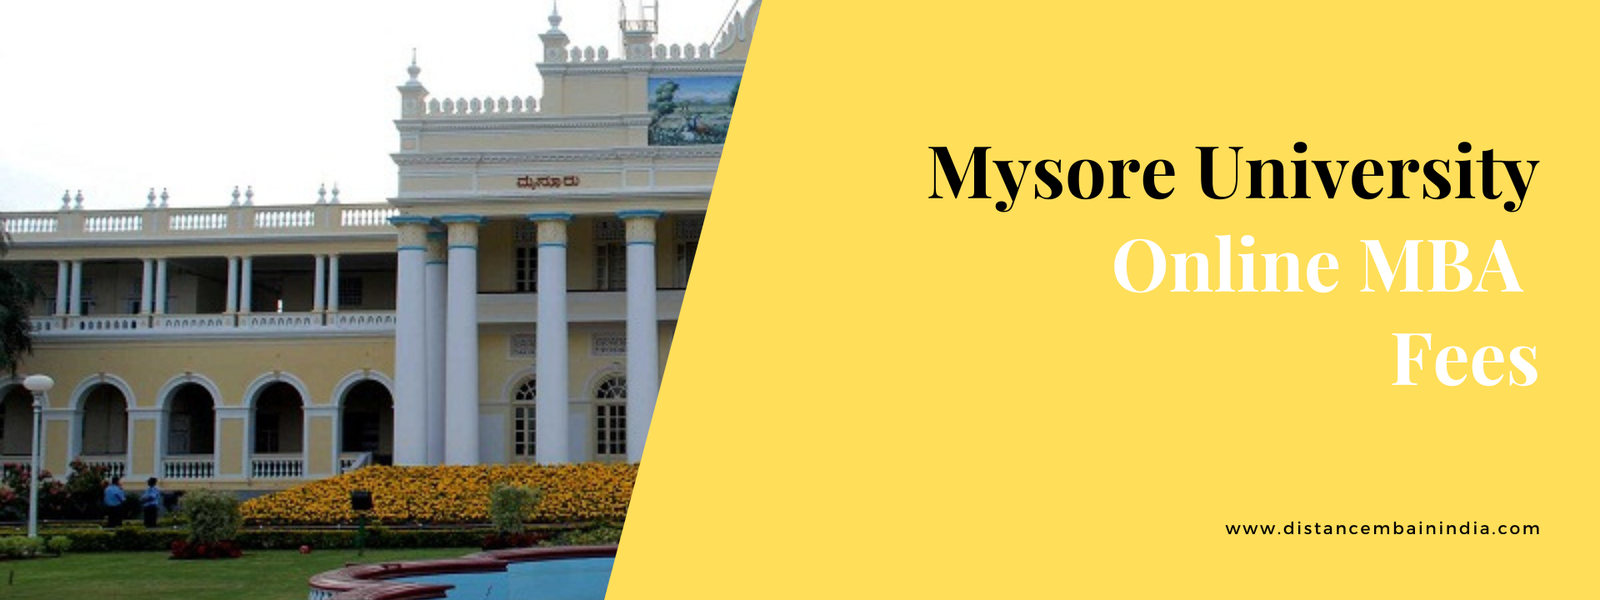 Mysore University Online MBA Fees